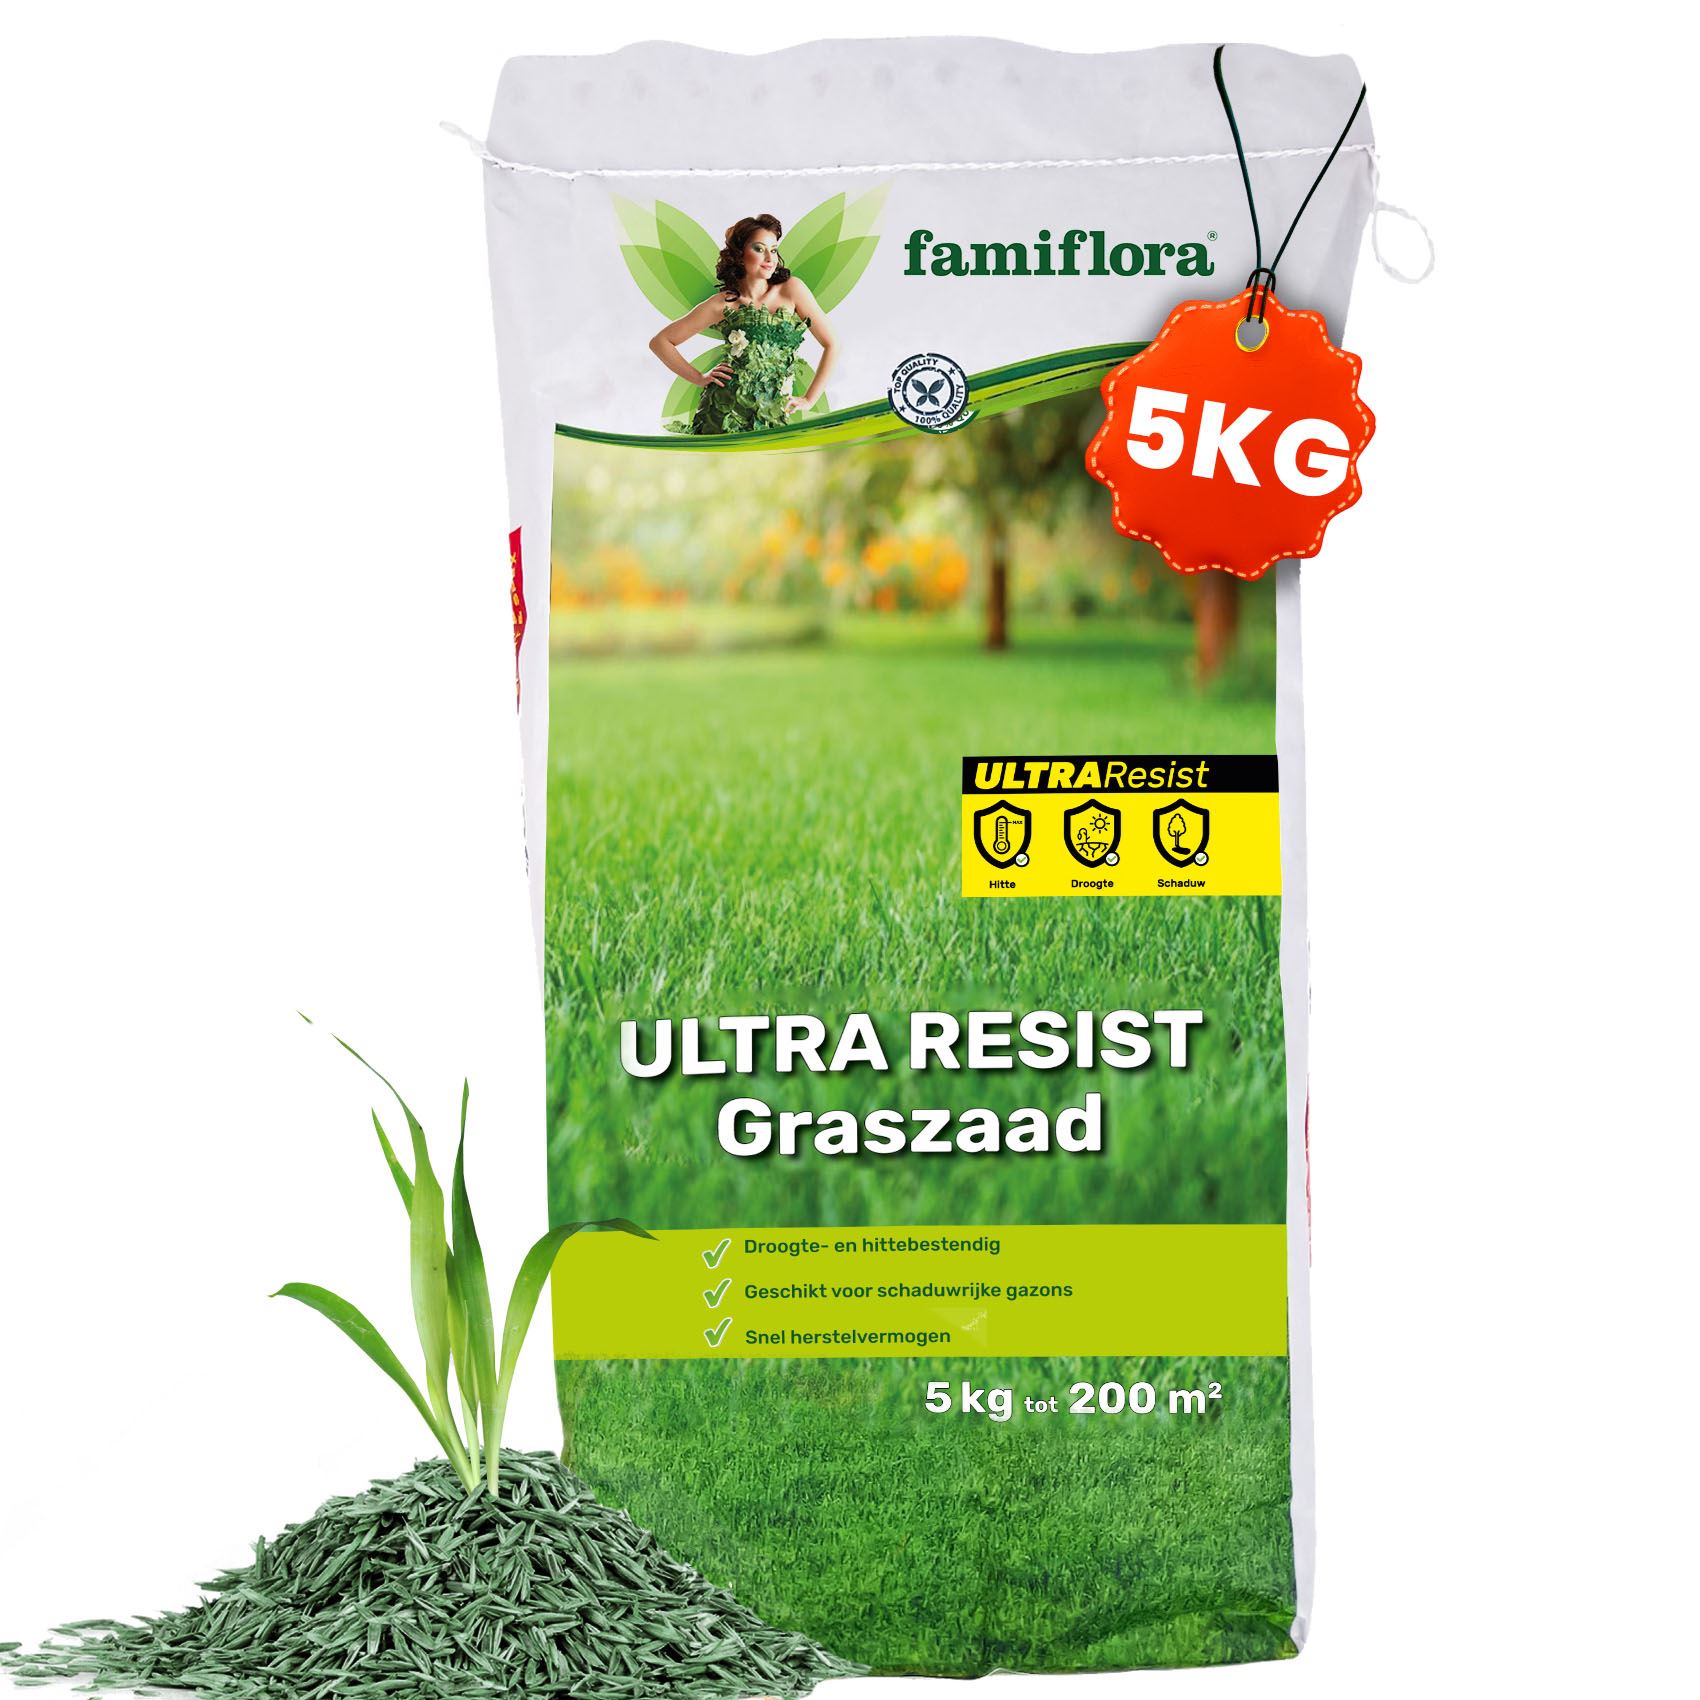 Famiflora Ultra resist semences de gazon 5 kg (jusqu'à 200 m²)